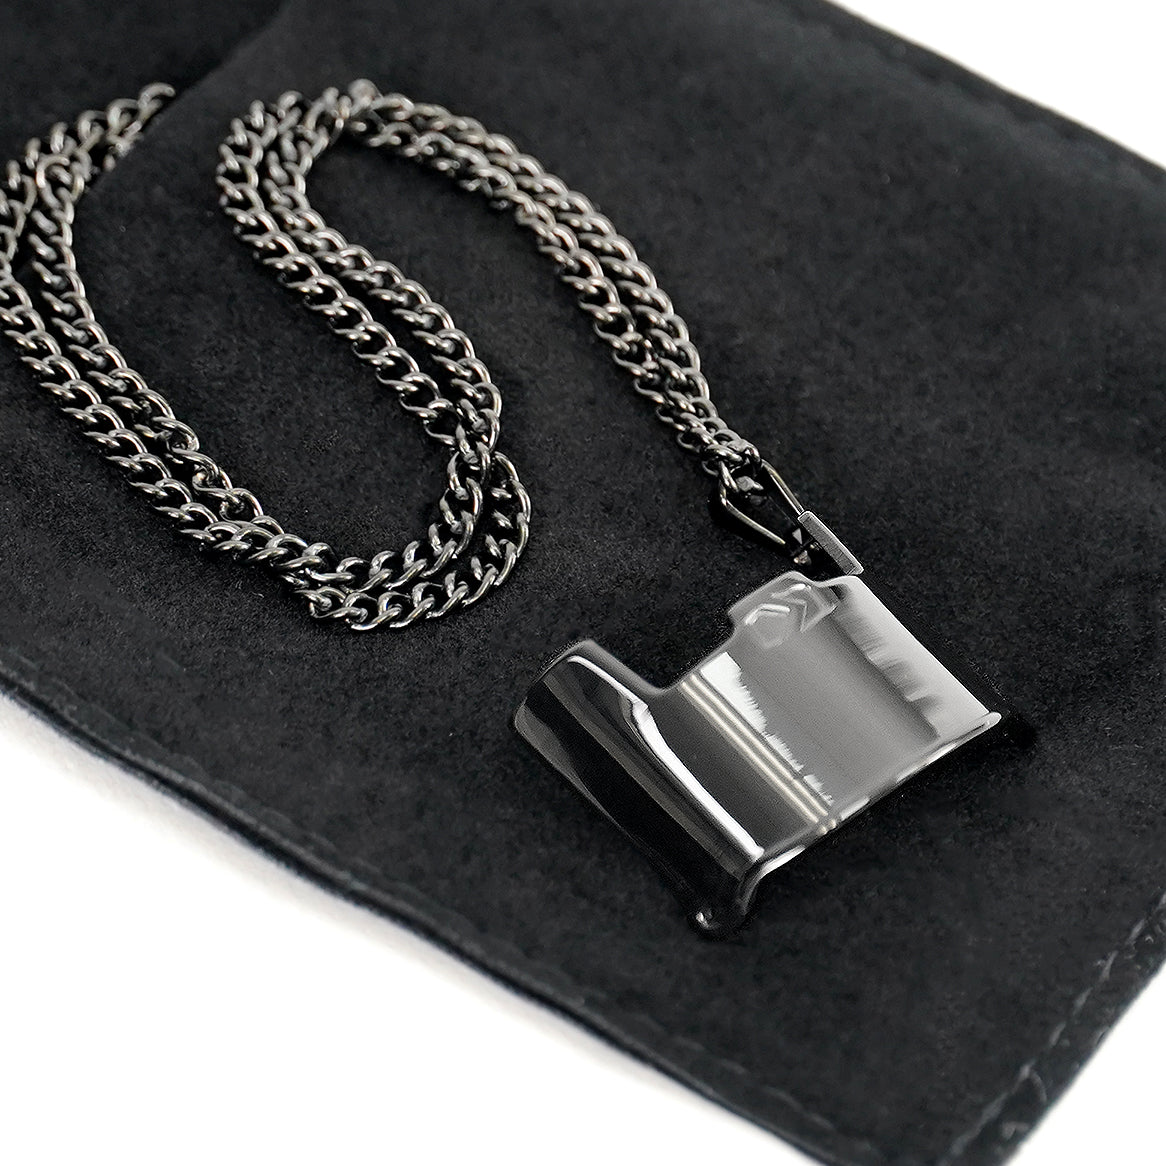 Helmet Visor Pendant with Chain Necklace - Black Stainless Steel